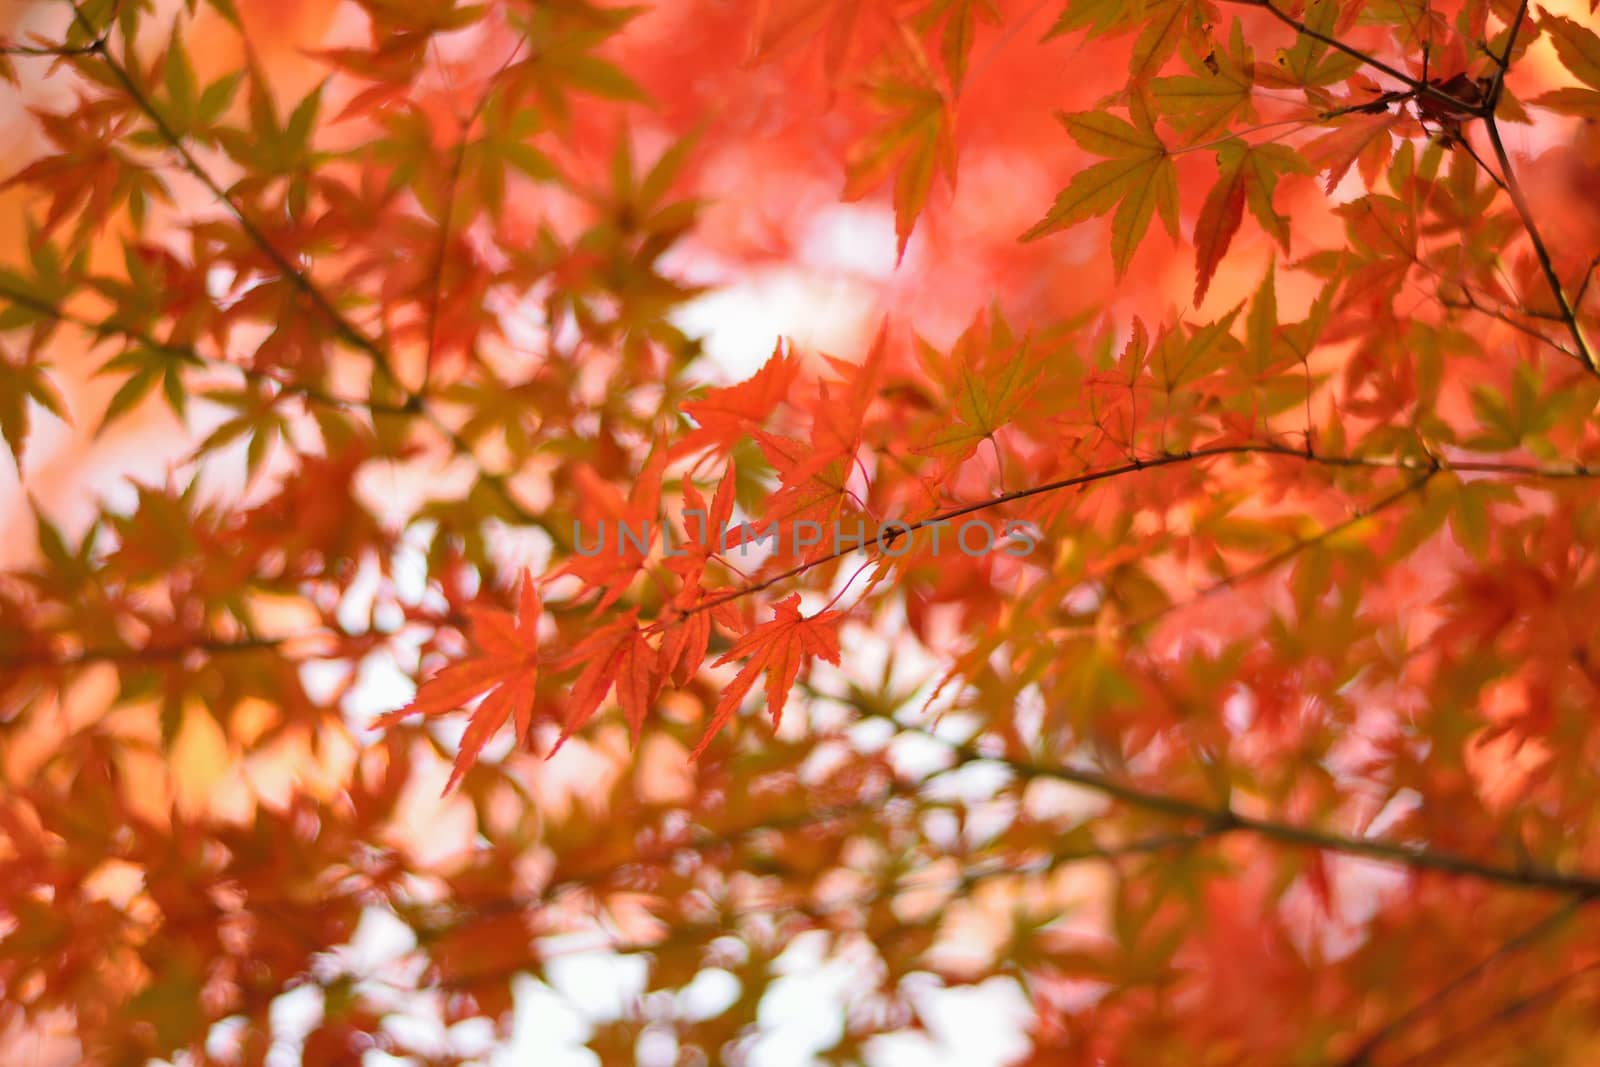 Vibrant Japanese Autumn Maple leaves Landscape with blurred background by shubhashish